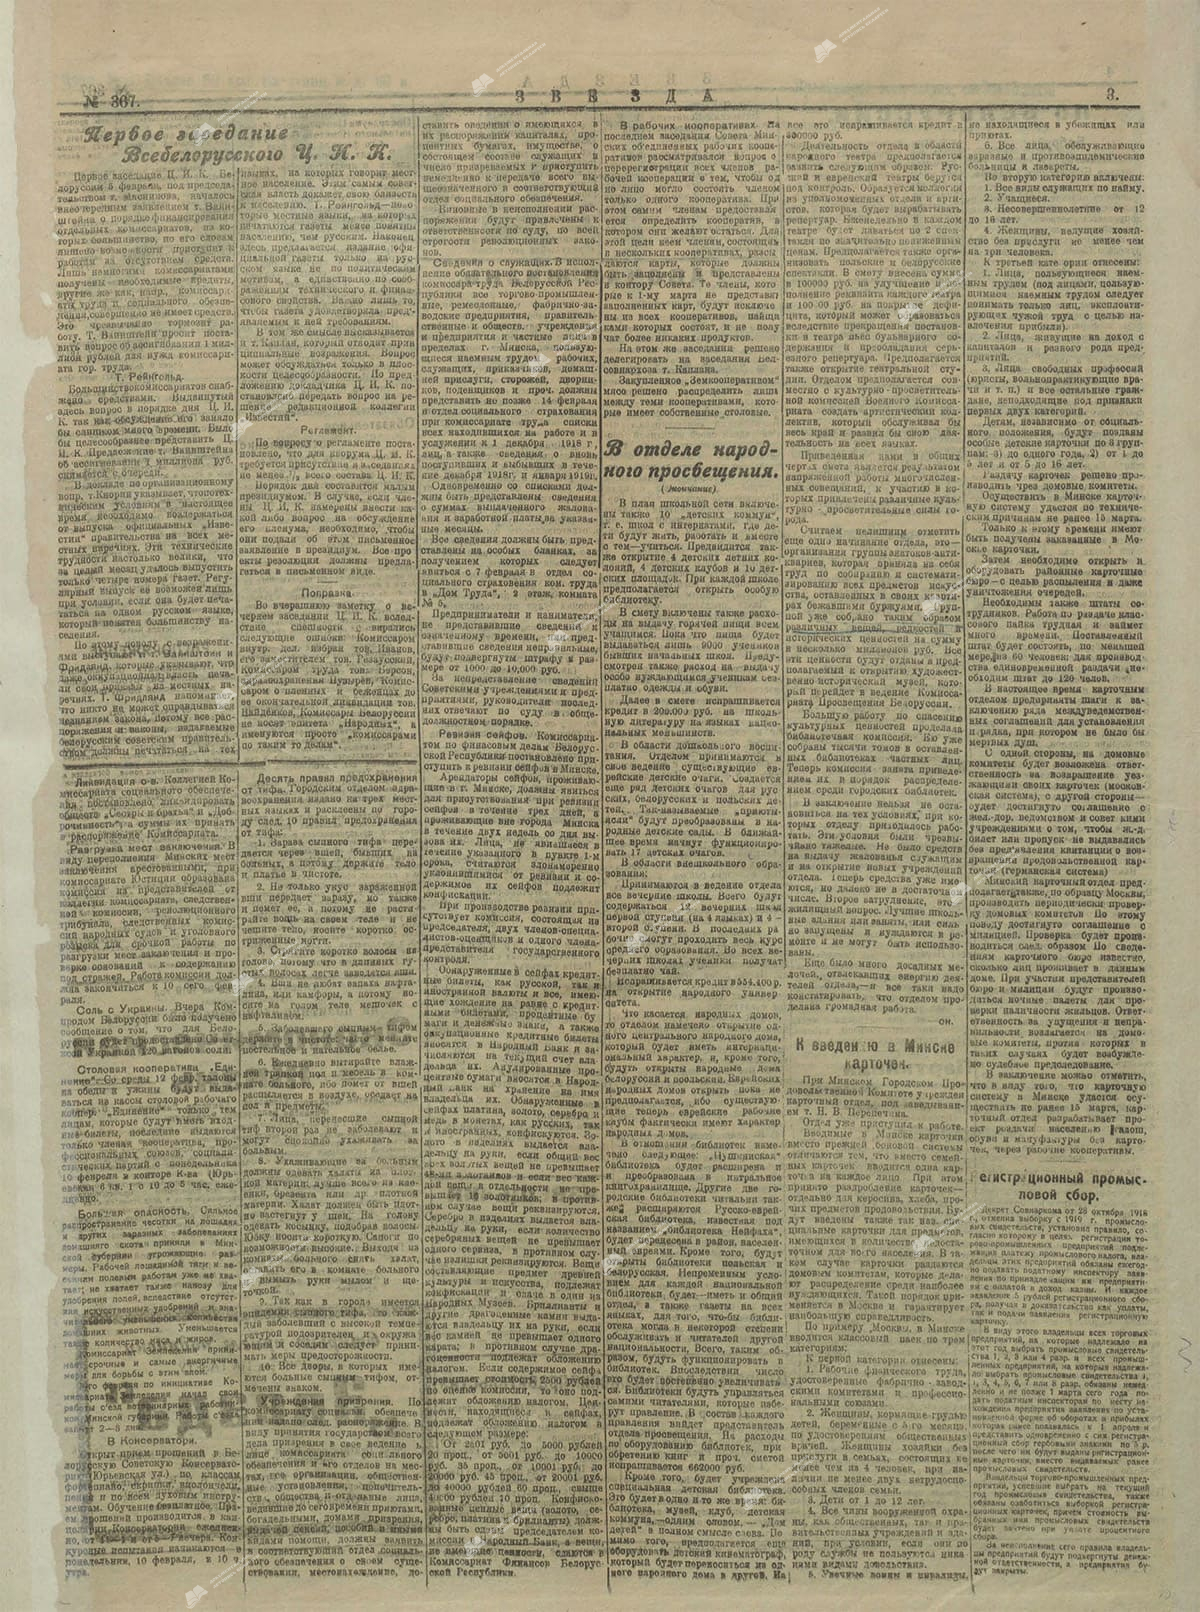 Newspaper «Star», 1919. February 7. No. 367.-с. 0